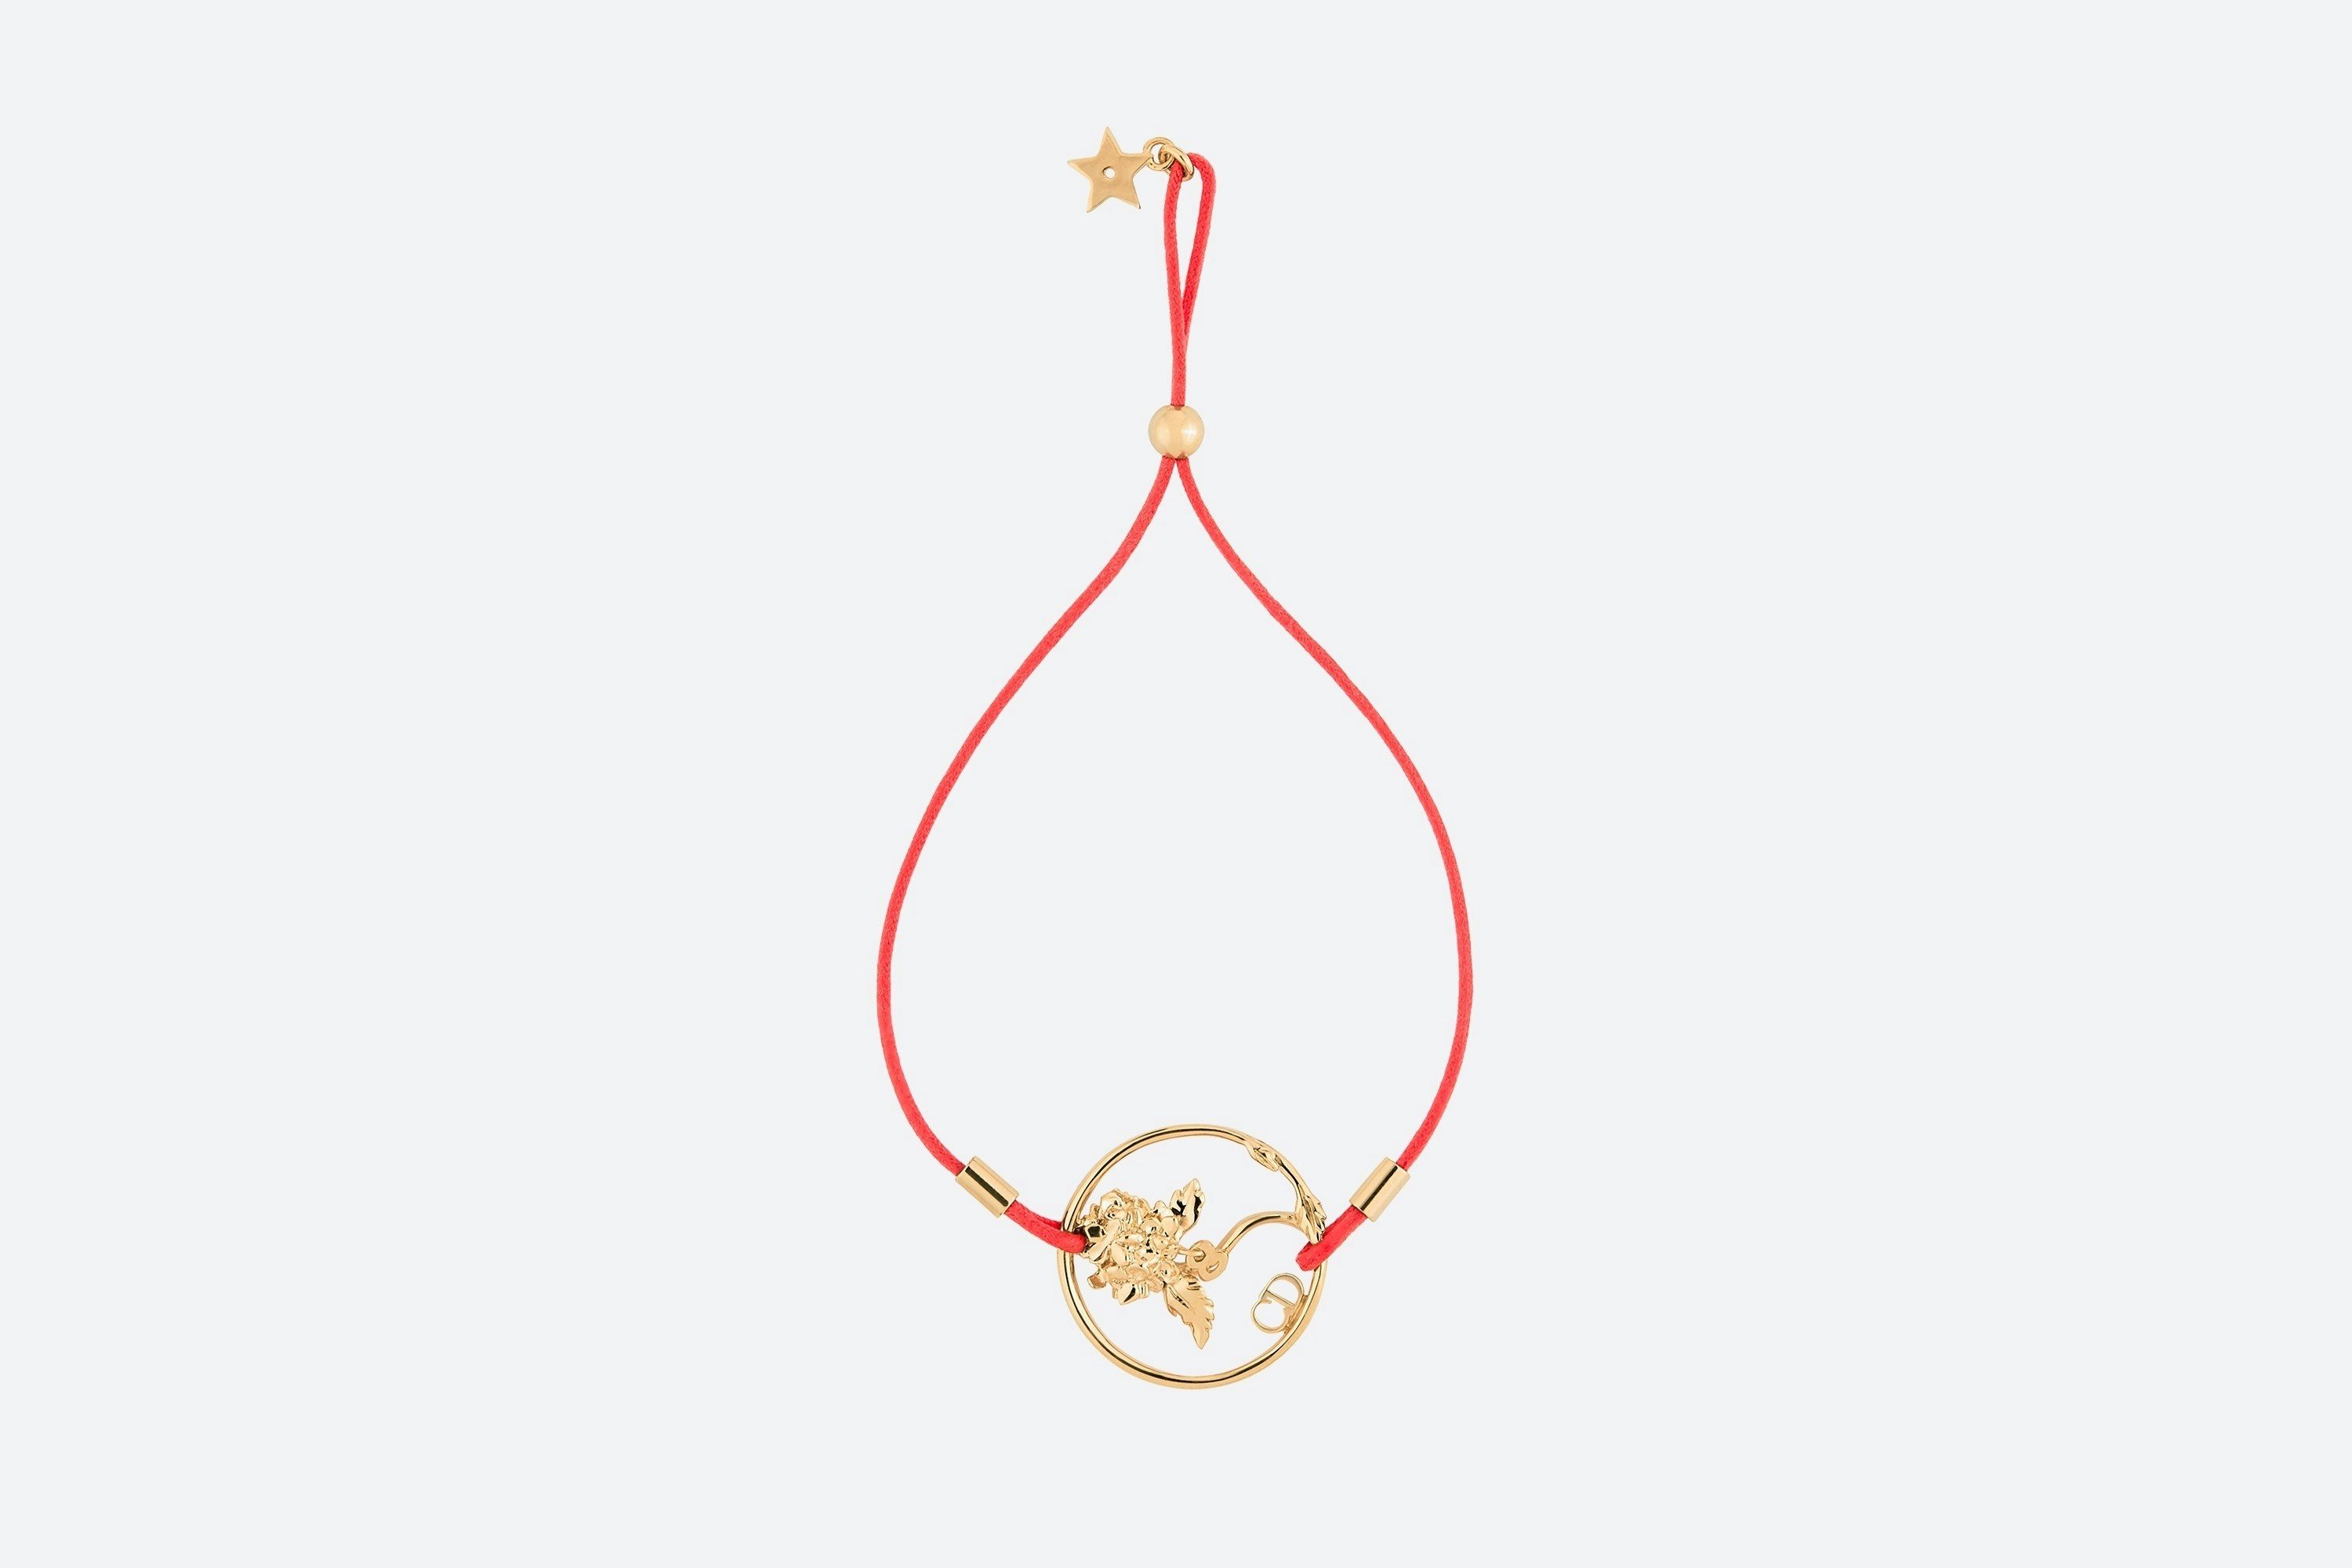 Dior's Chinese zodiac redline bracelet. Photo: Courtesy of Dior